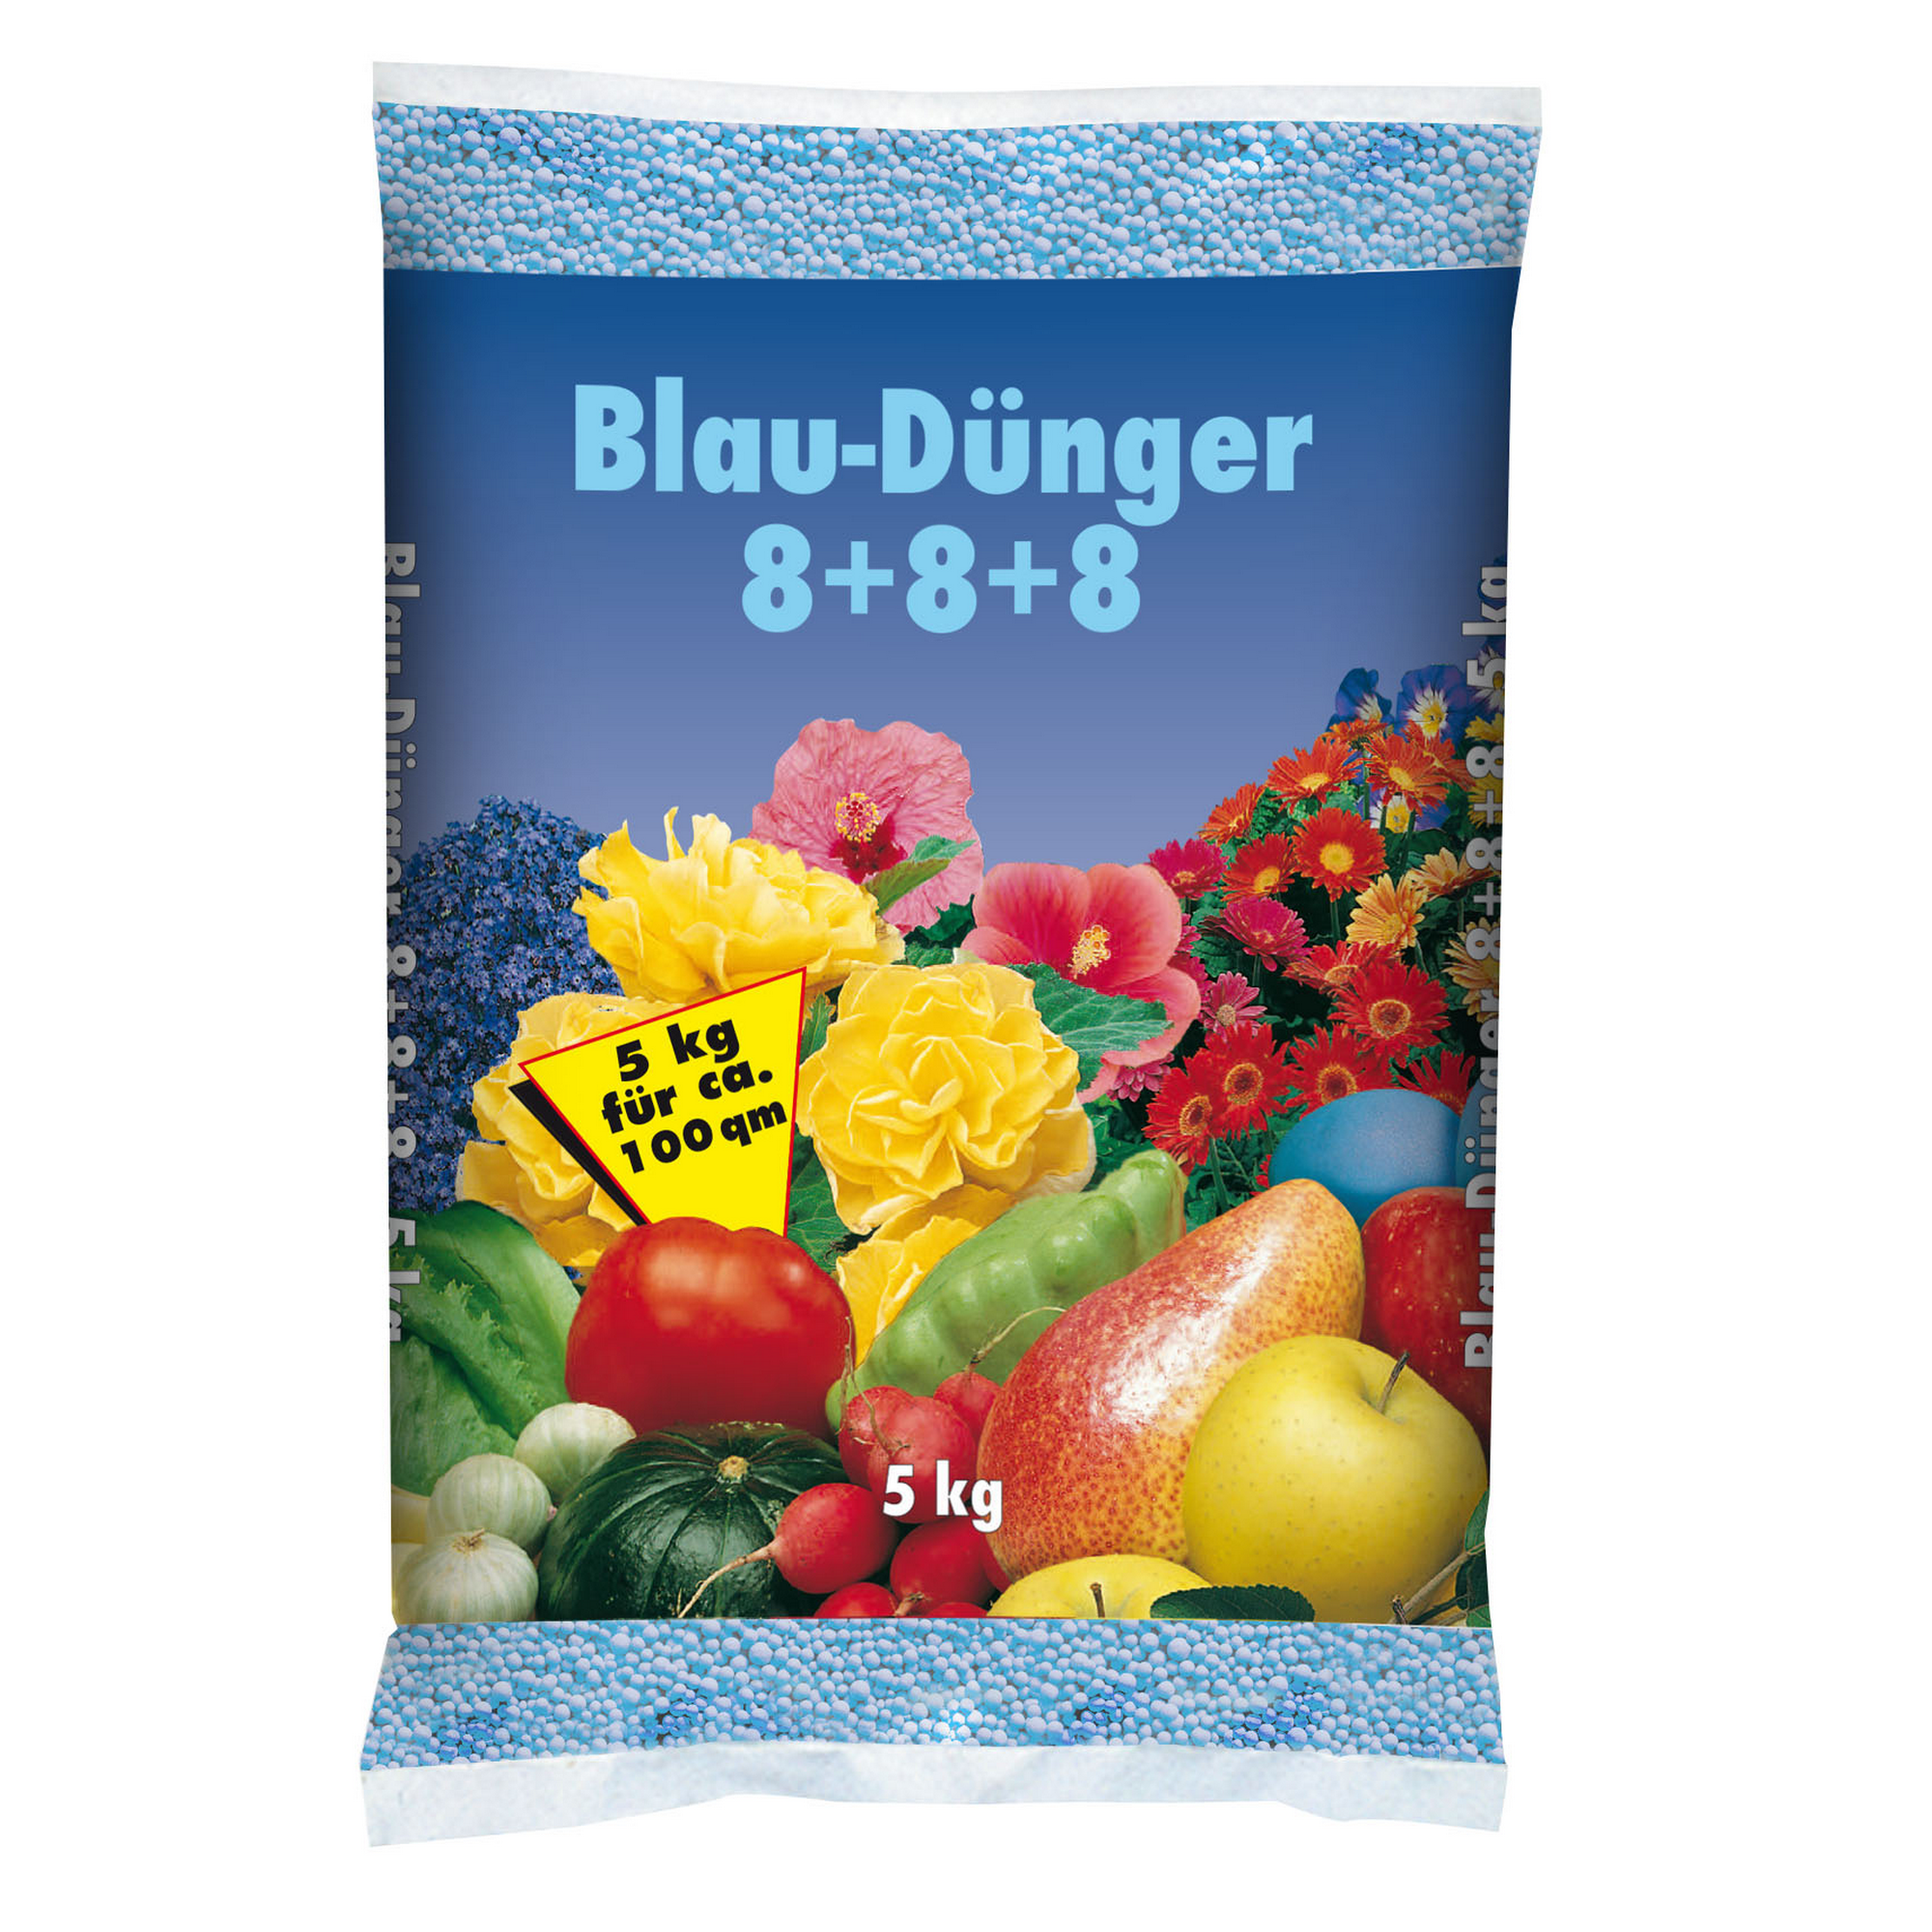 Blaudünger '8-8-8' 5 kg + product picture